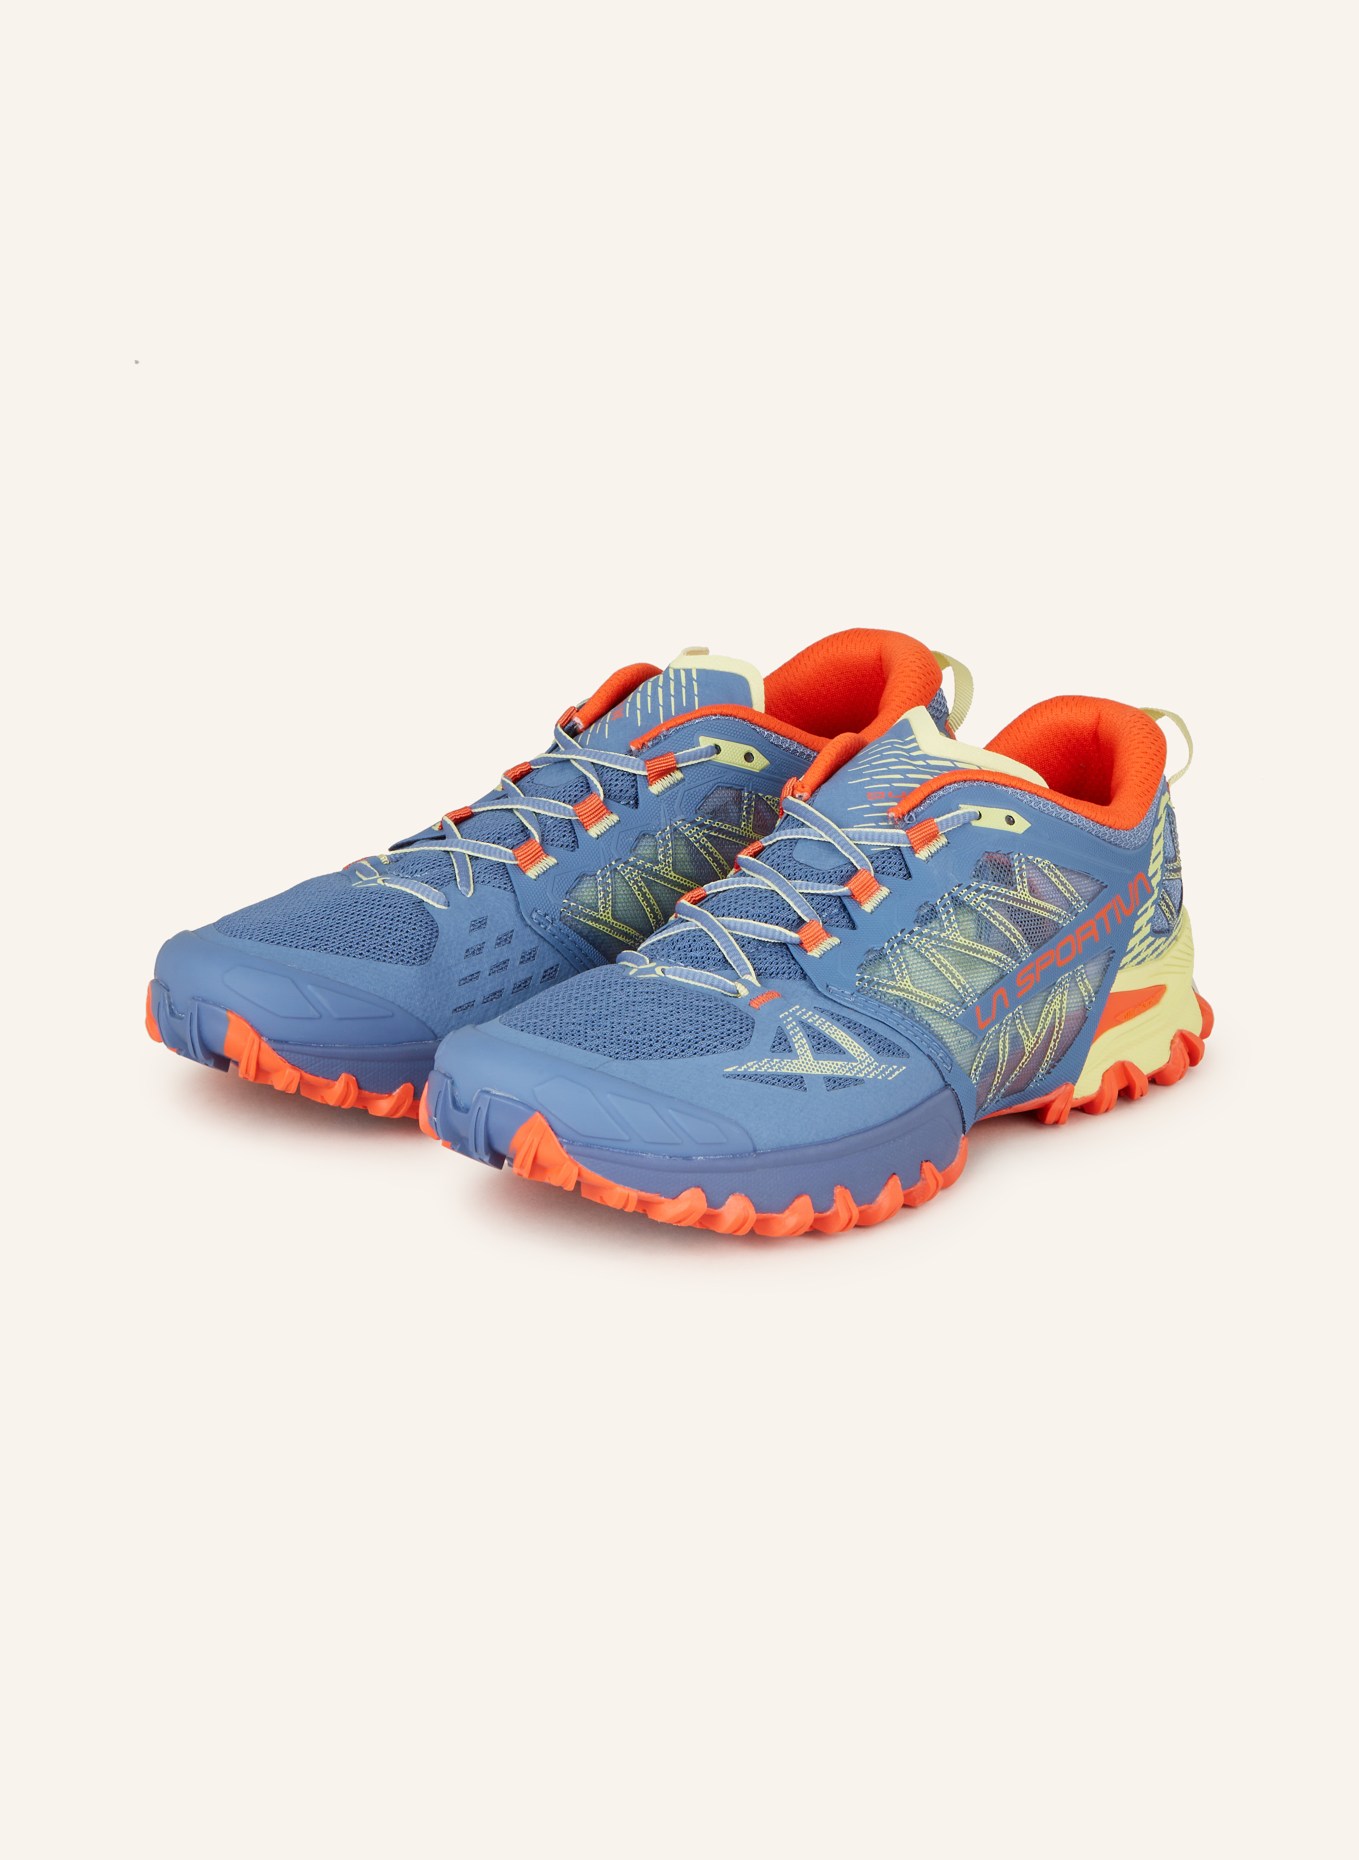 LA SPORTIVA Trailrunning-Schuhe BUSHIDO III, Farbe: BLAUGRAU/ DUNKELORANGE/ GELB (Bild 1)